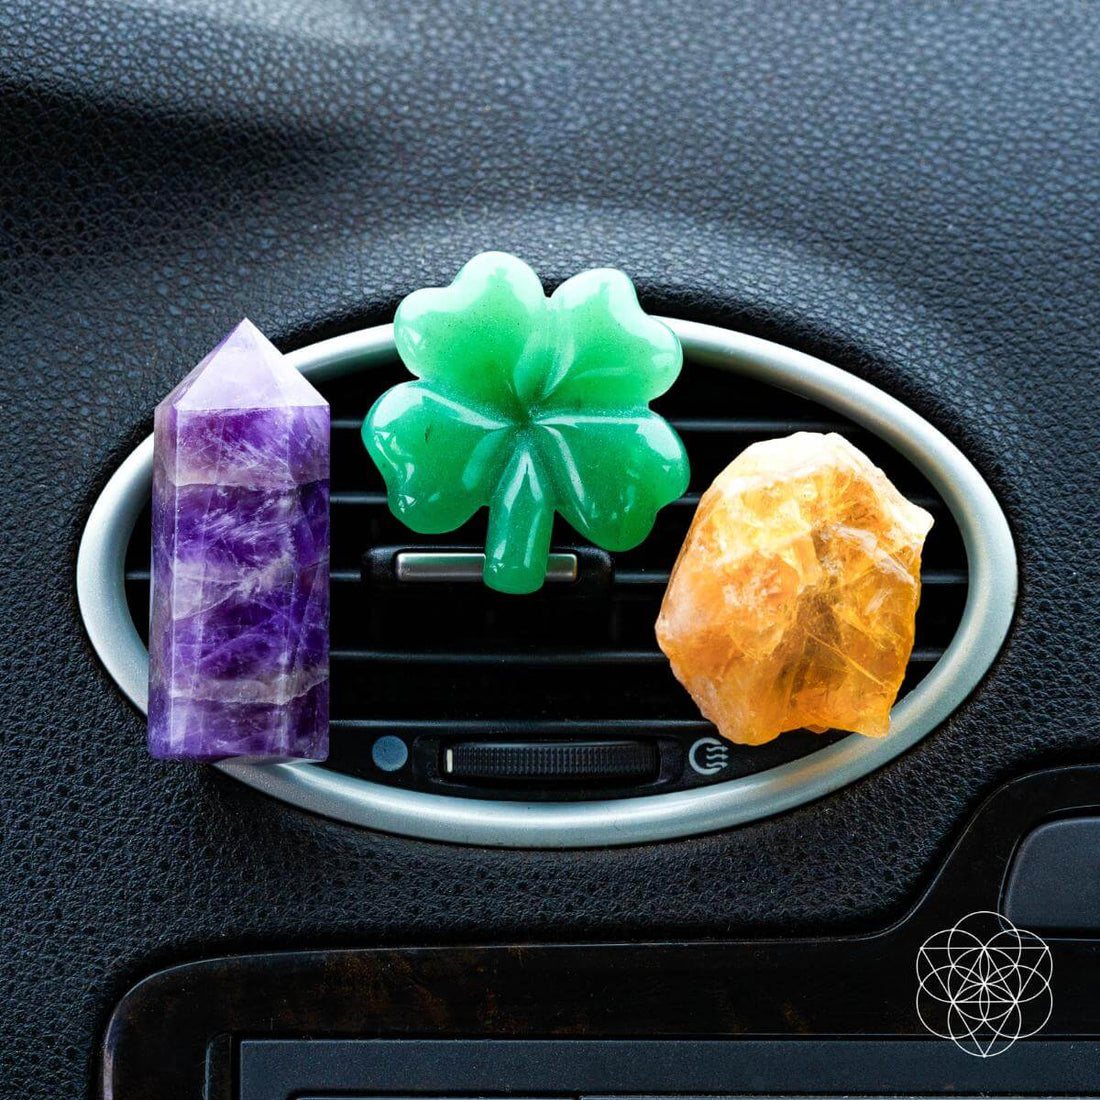 Guardianes de la carretera - Kit de cristal de Lucky Car